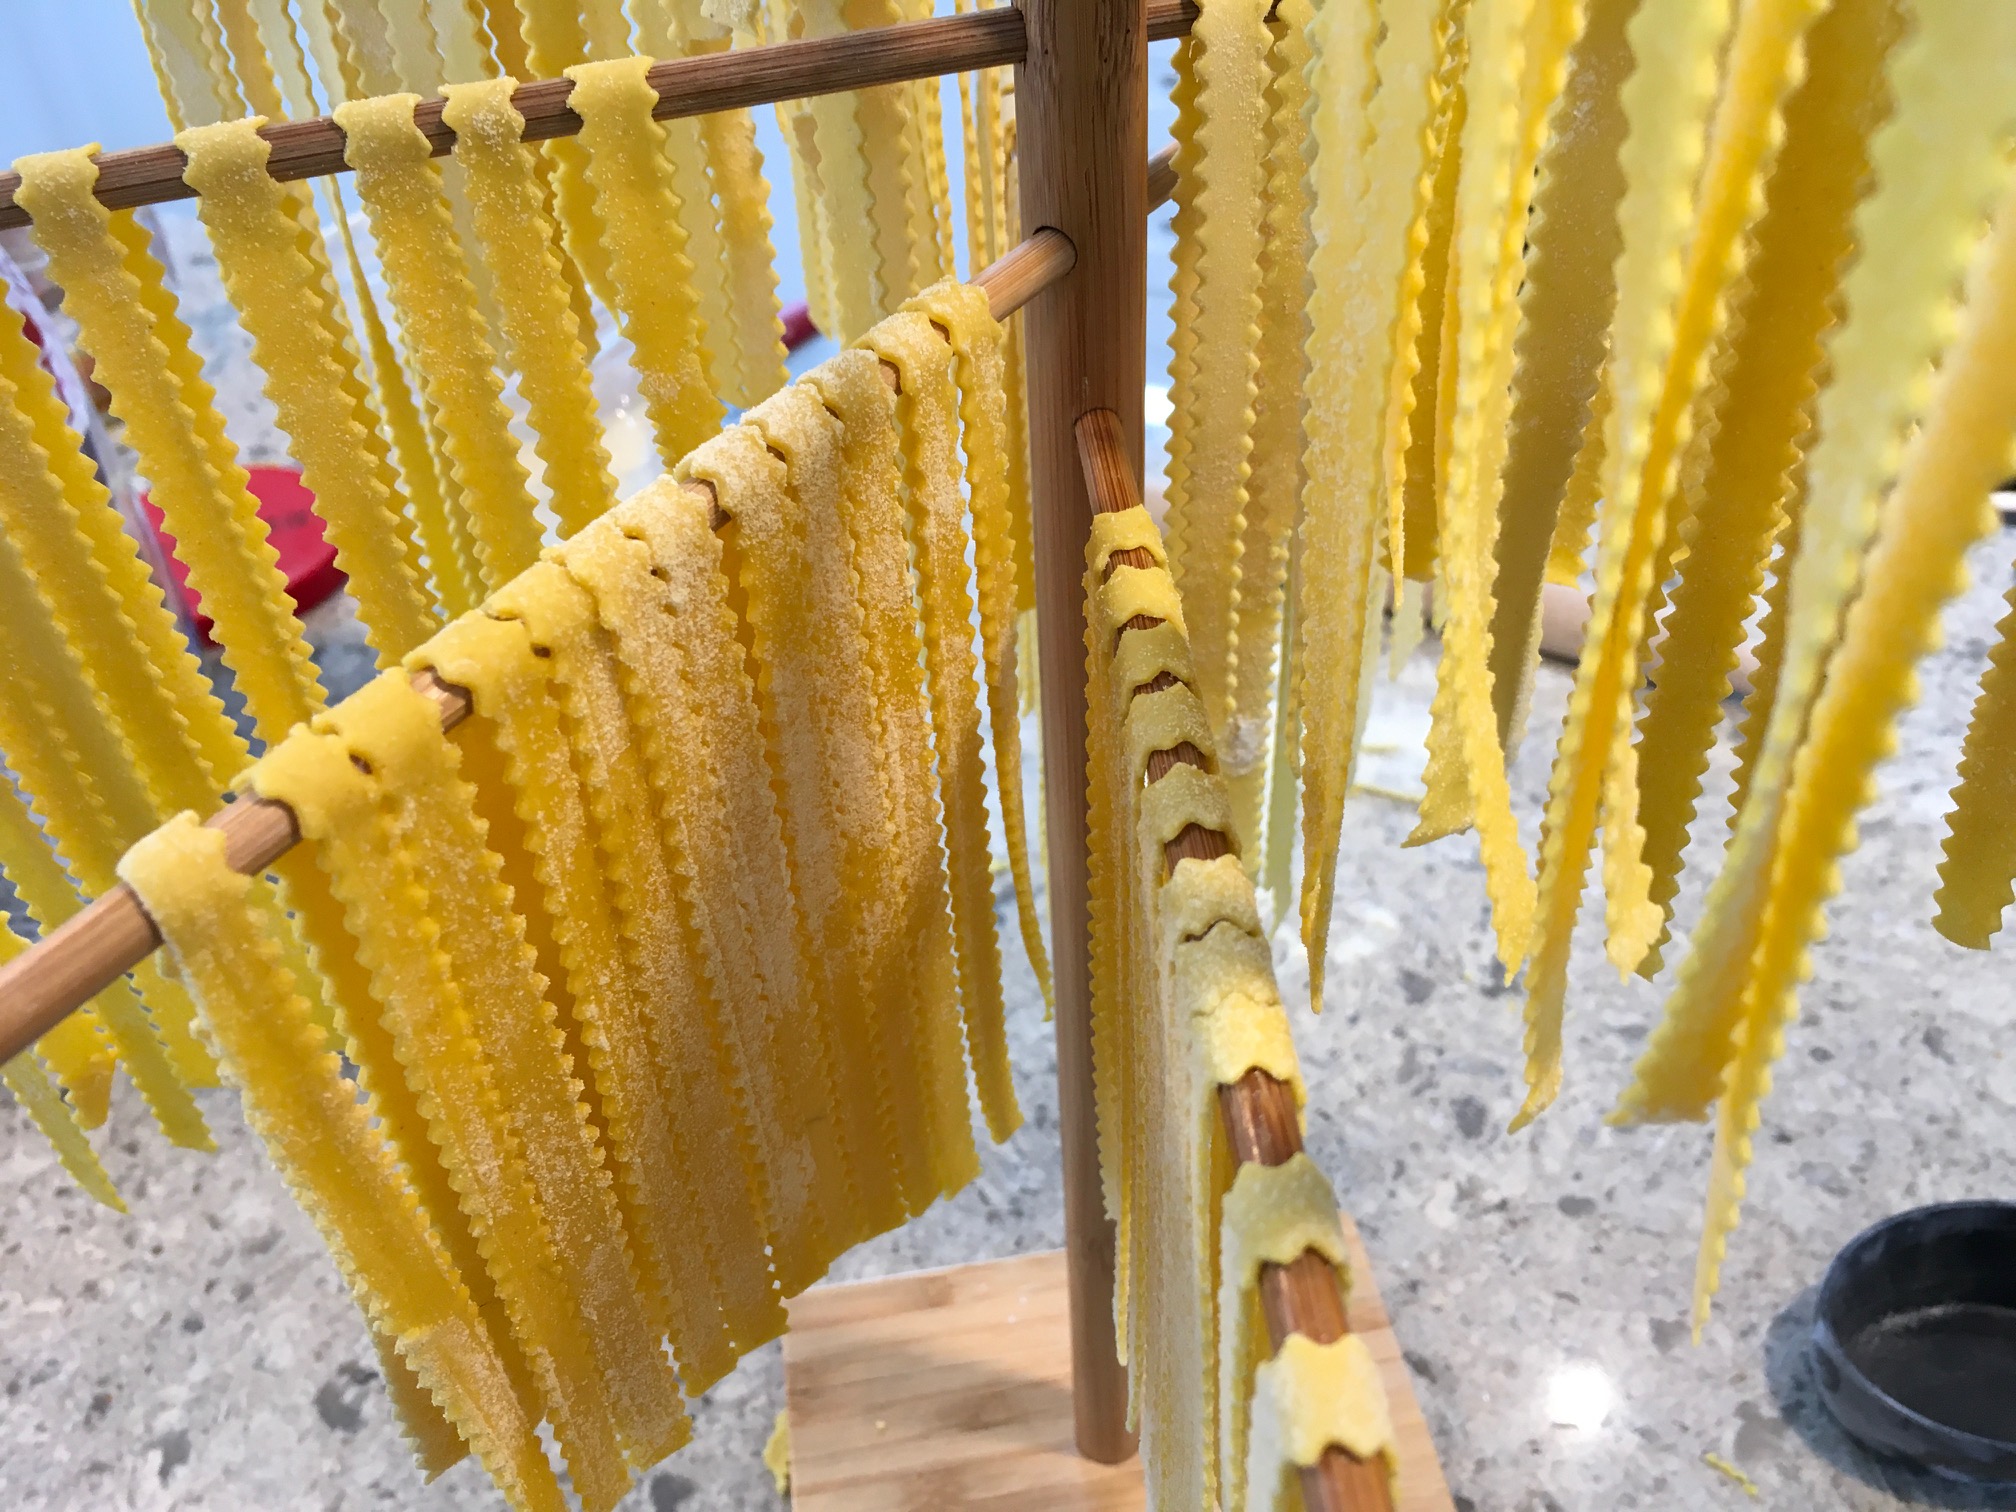 Mafaldine pasta nnoodles drying